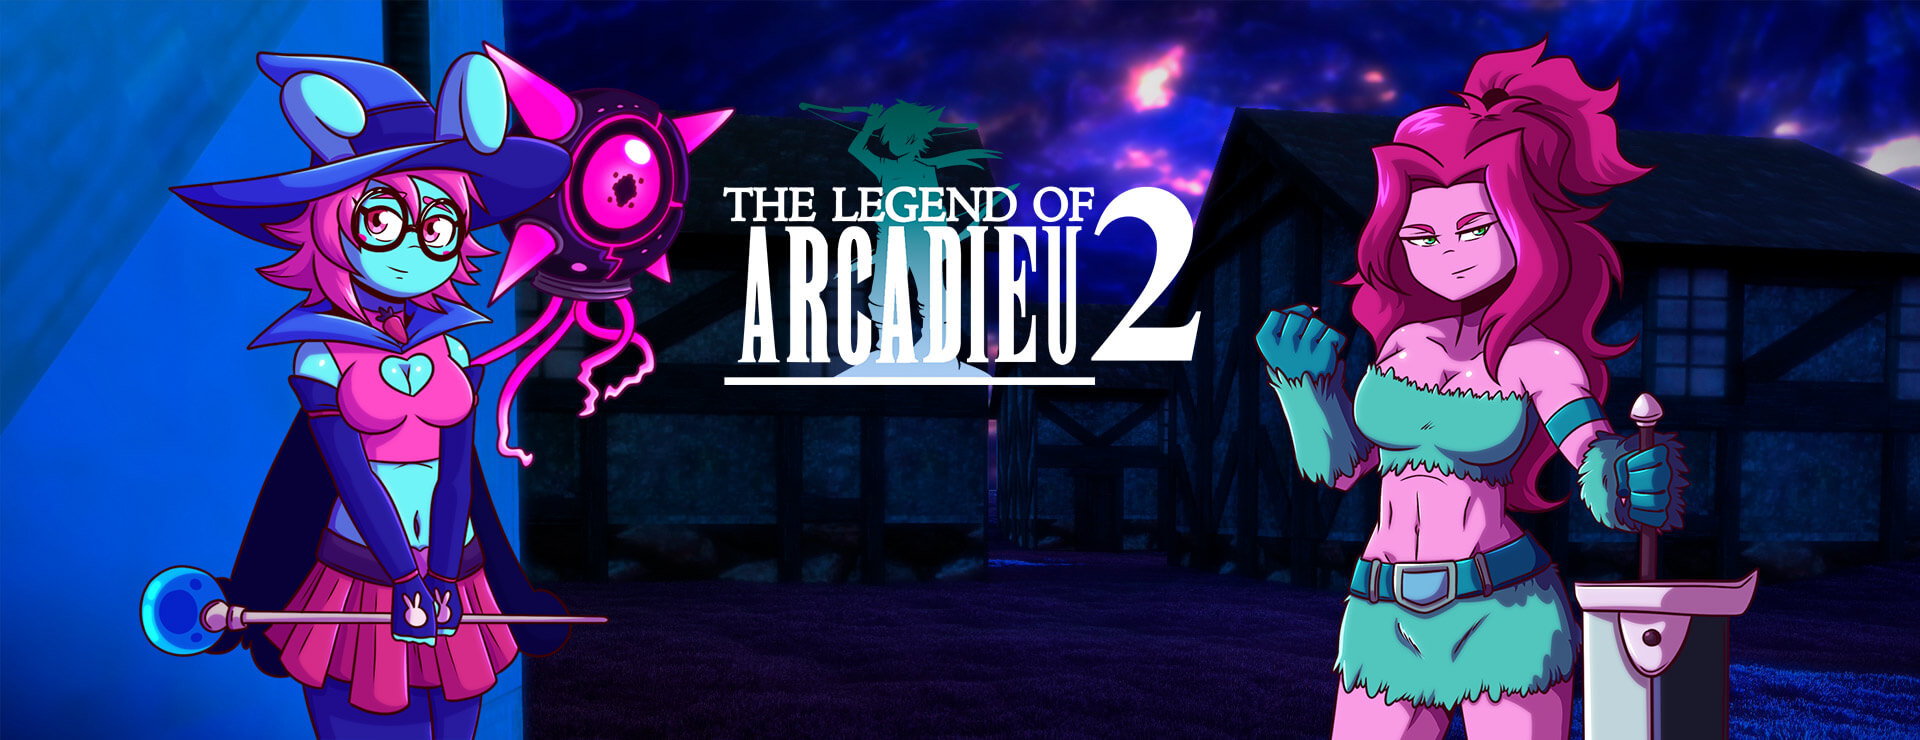 The Legend of Arcadieu 2 - RPG ゲーム